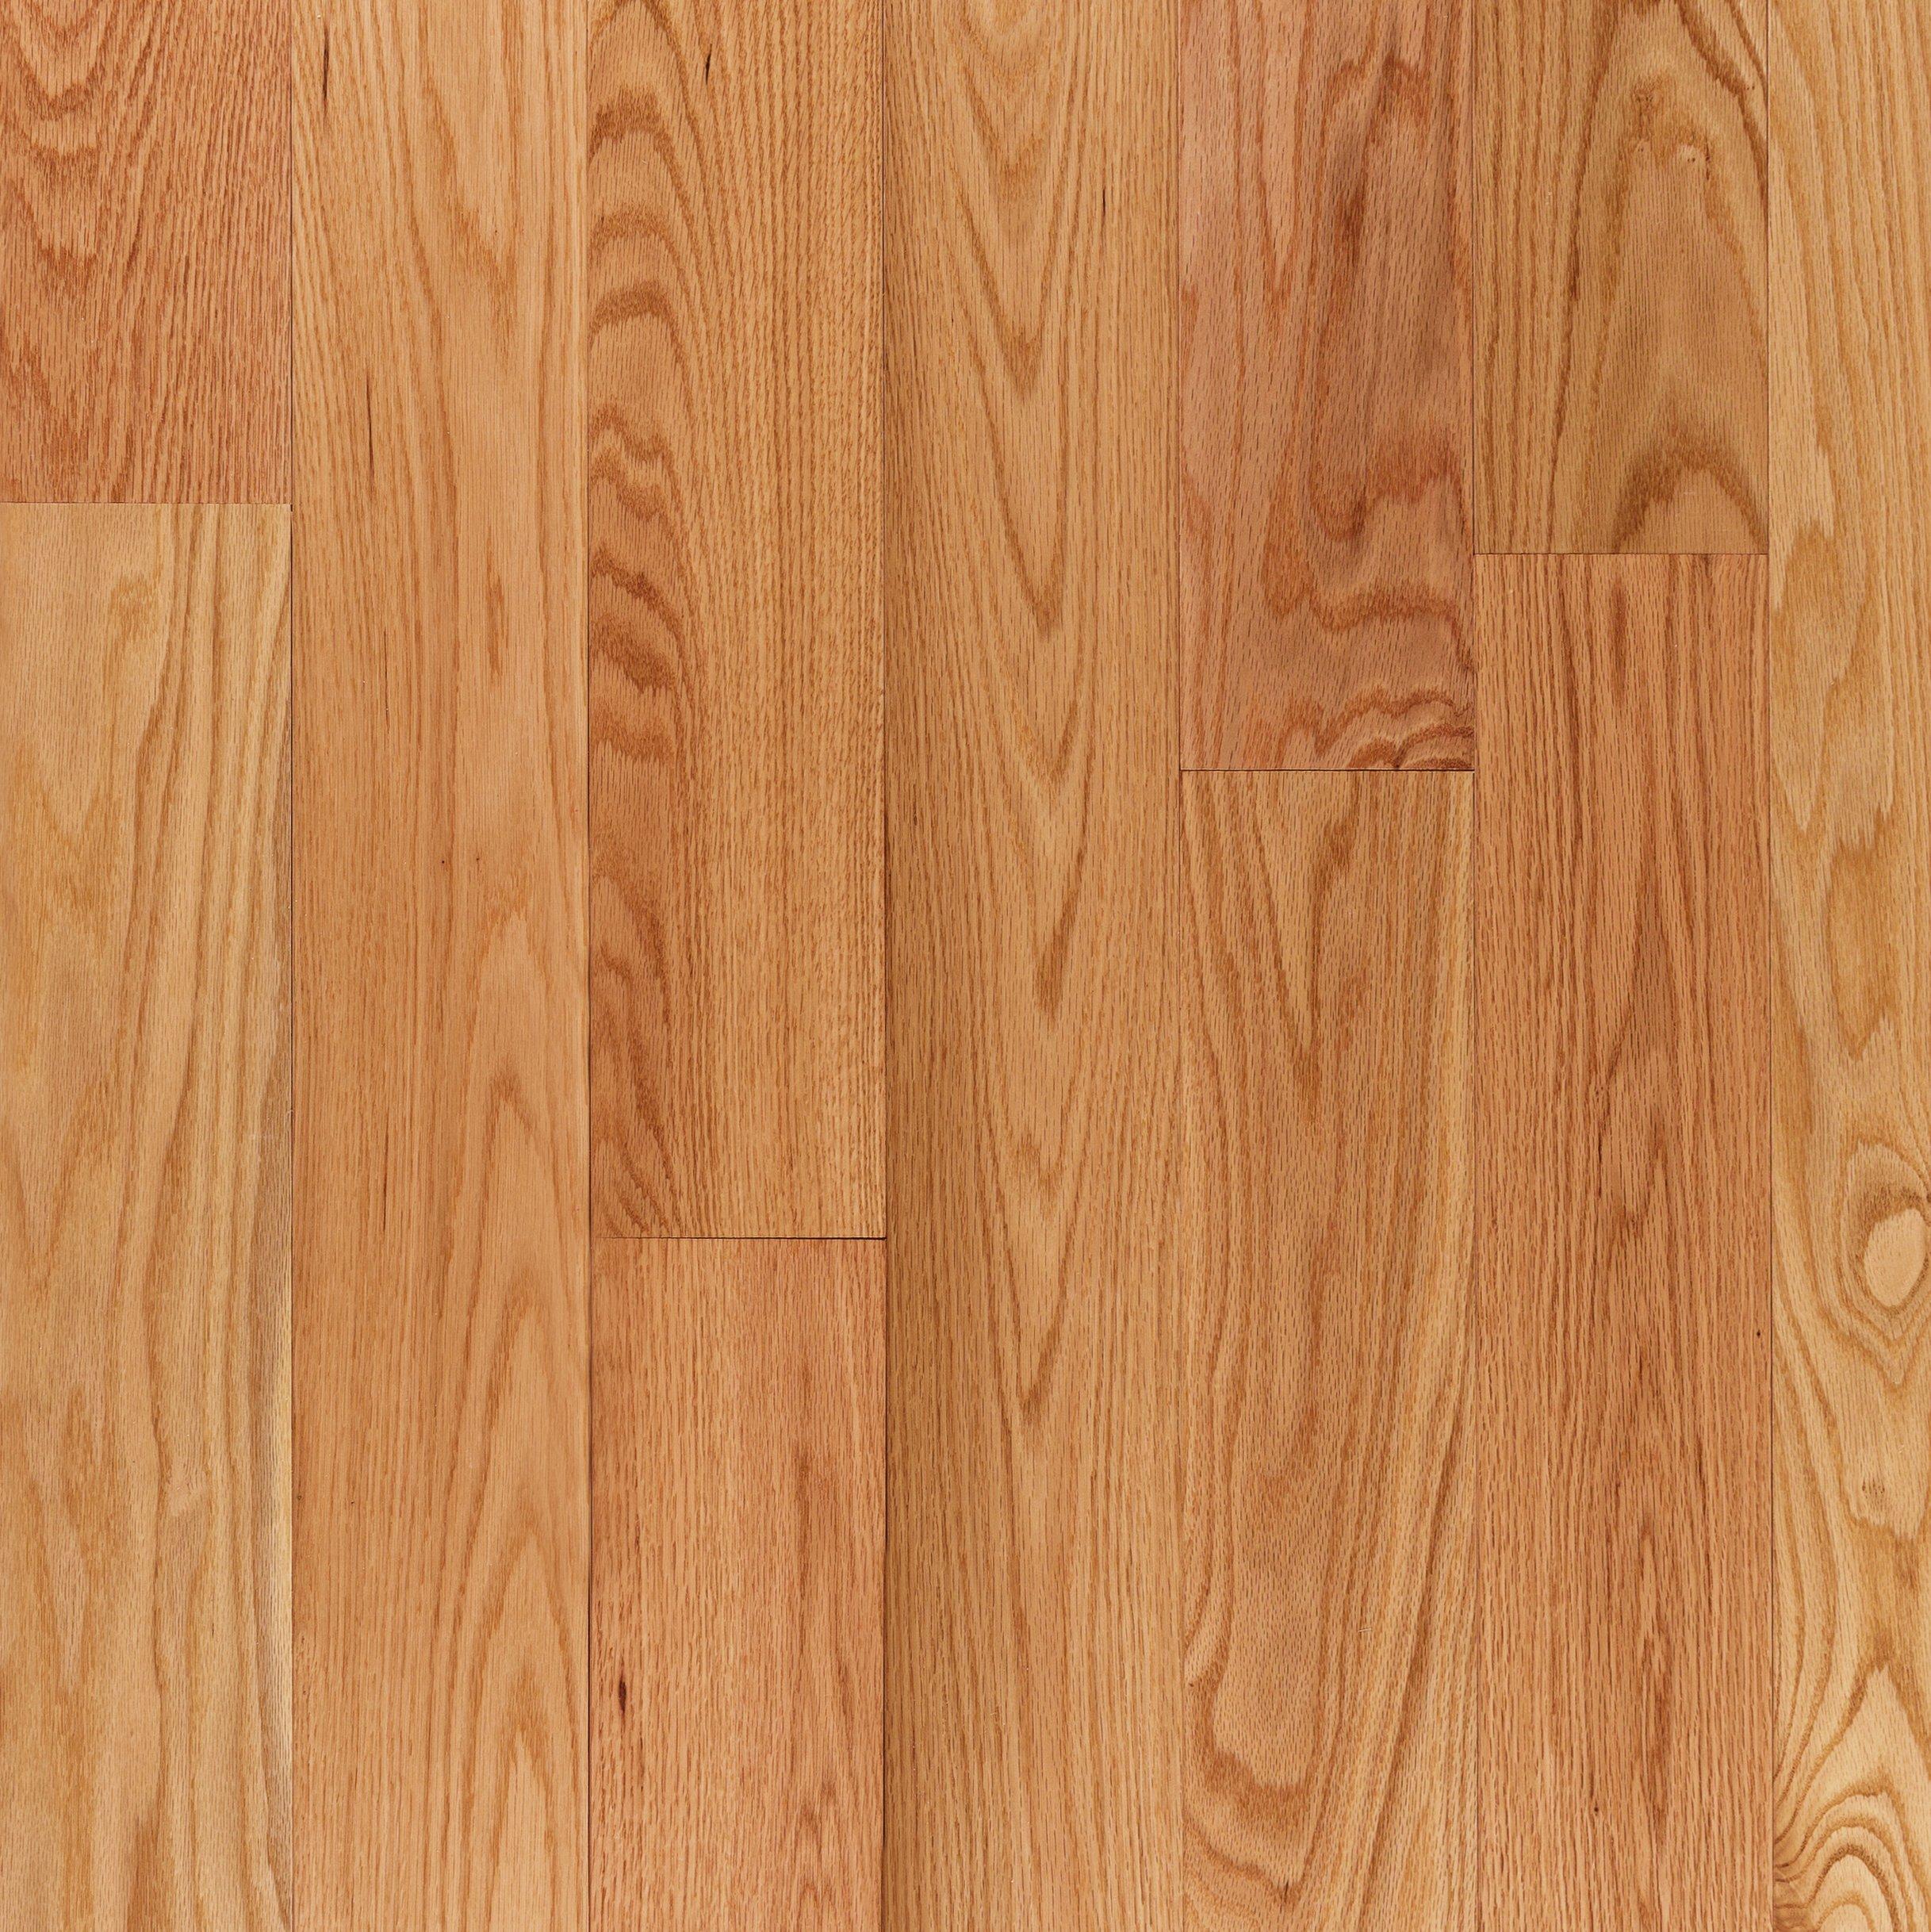 Red Oak Smooth Solid Hardwood Floor, Select Hardwood Flooring